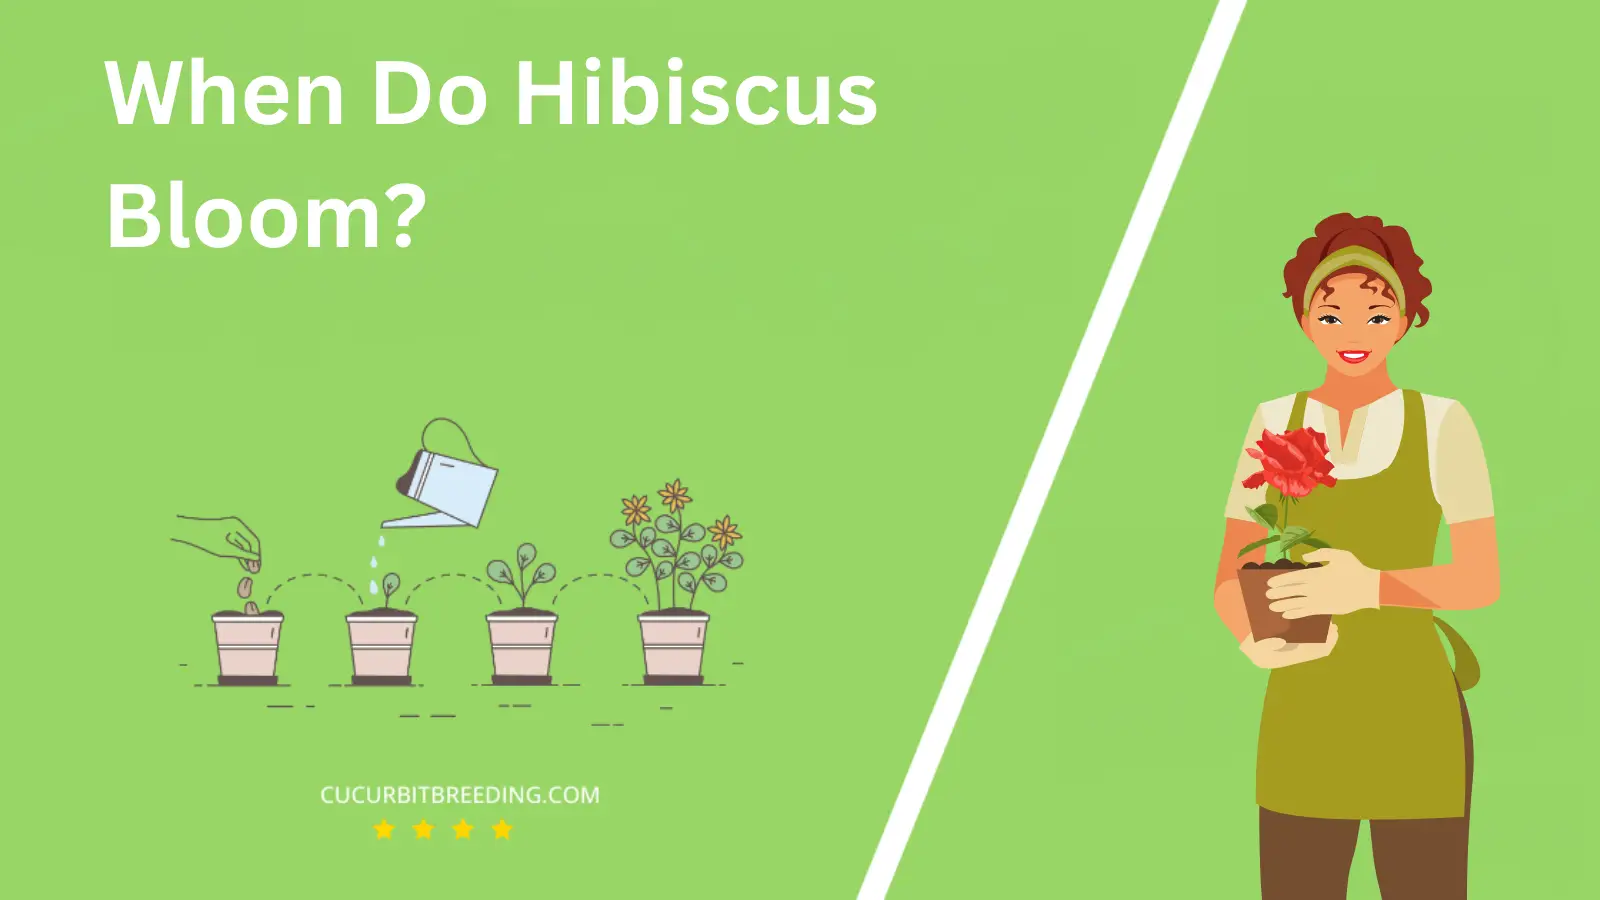 When Do Hibiscus Bloom?